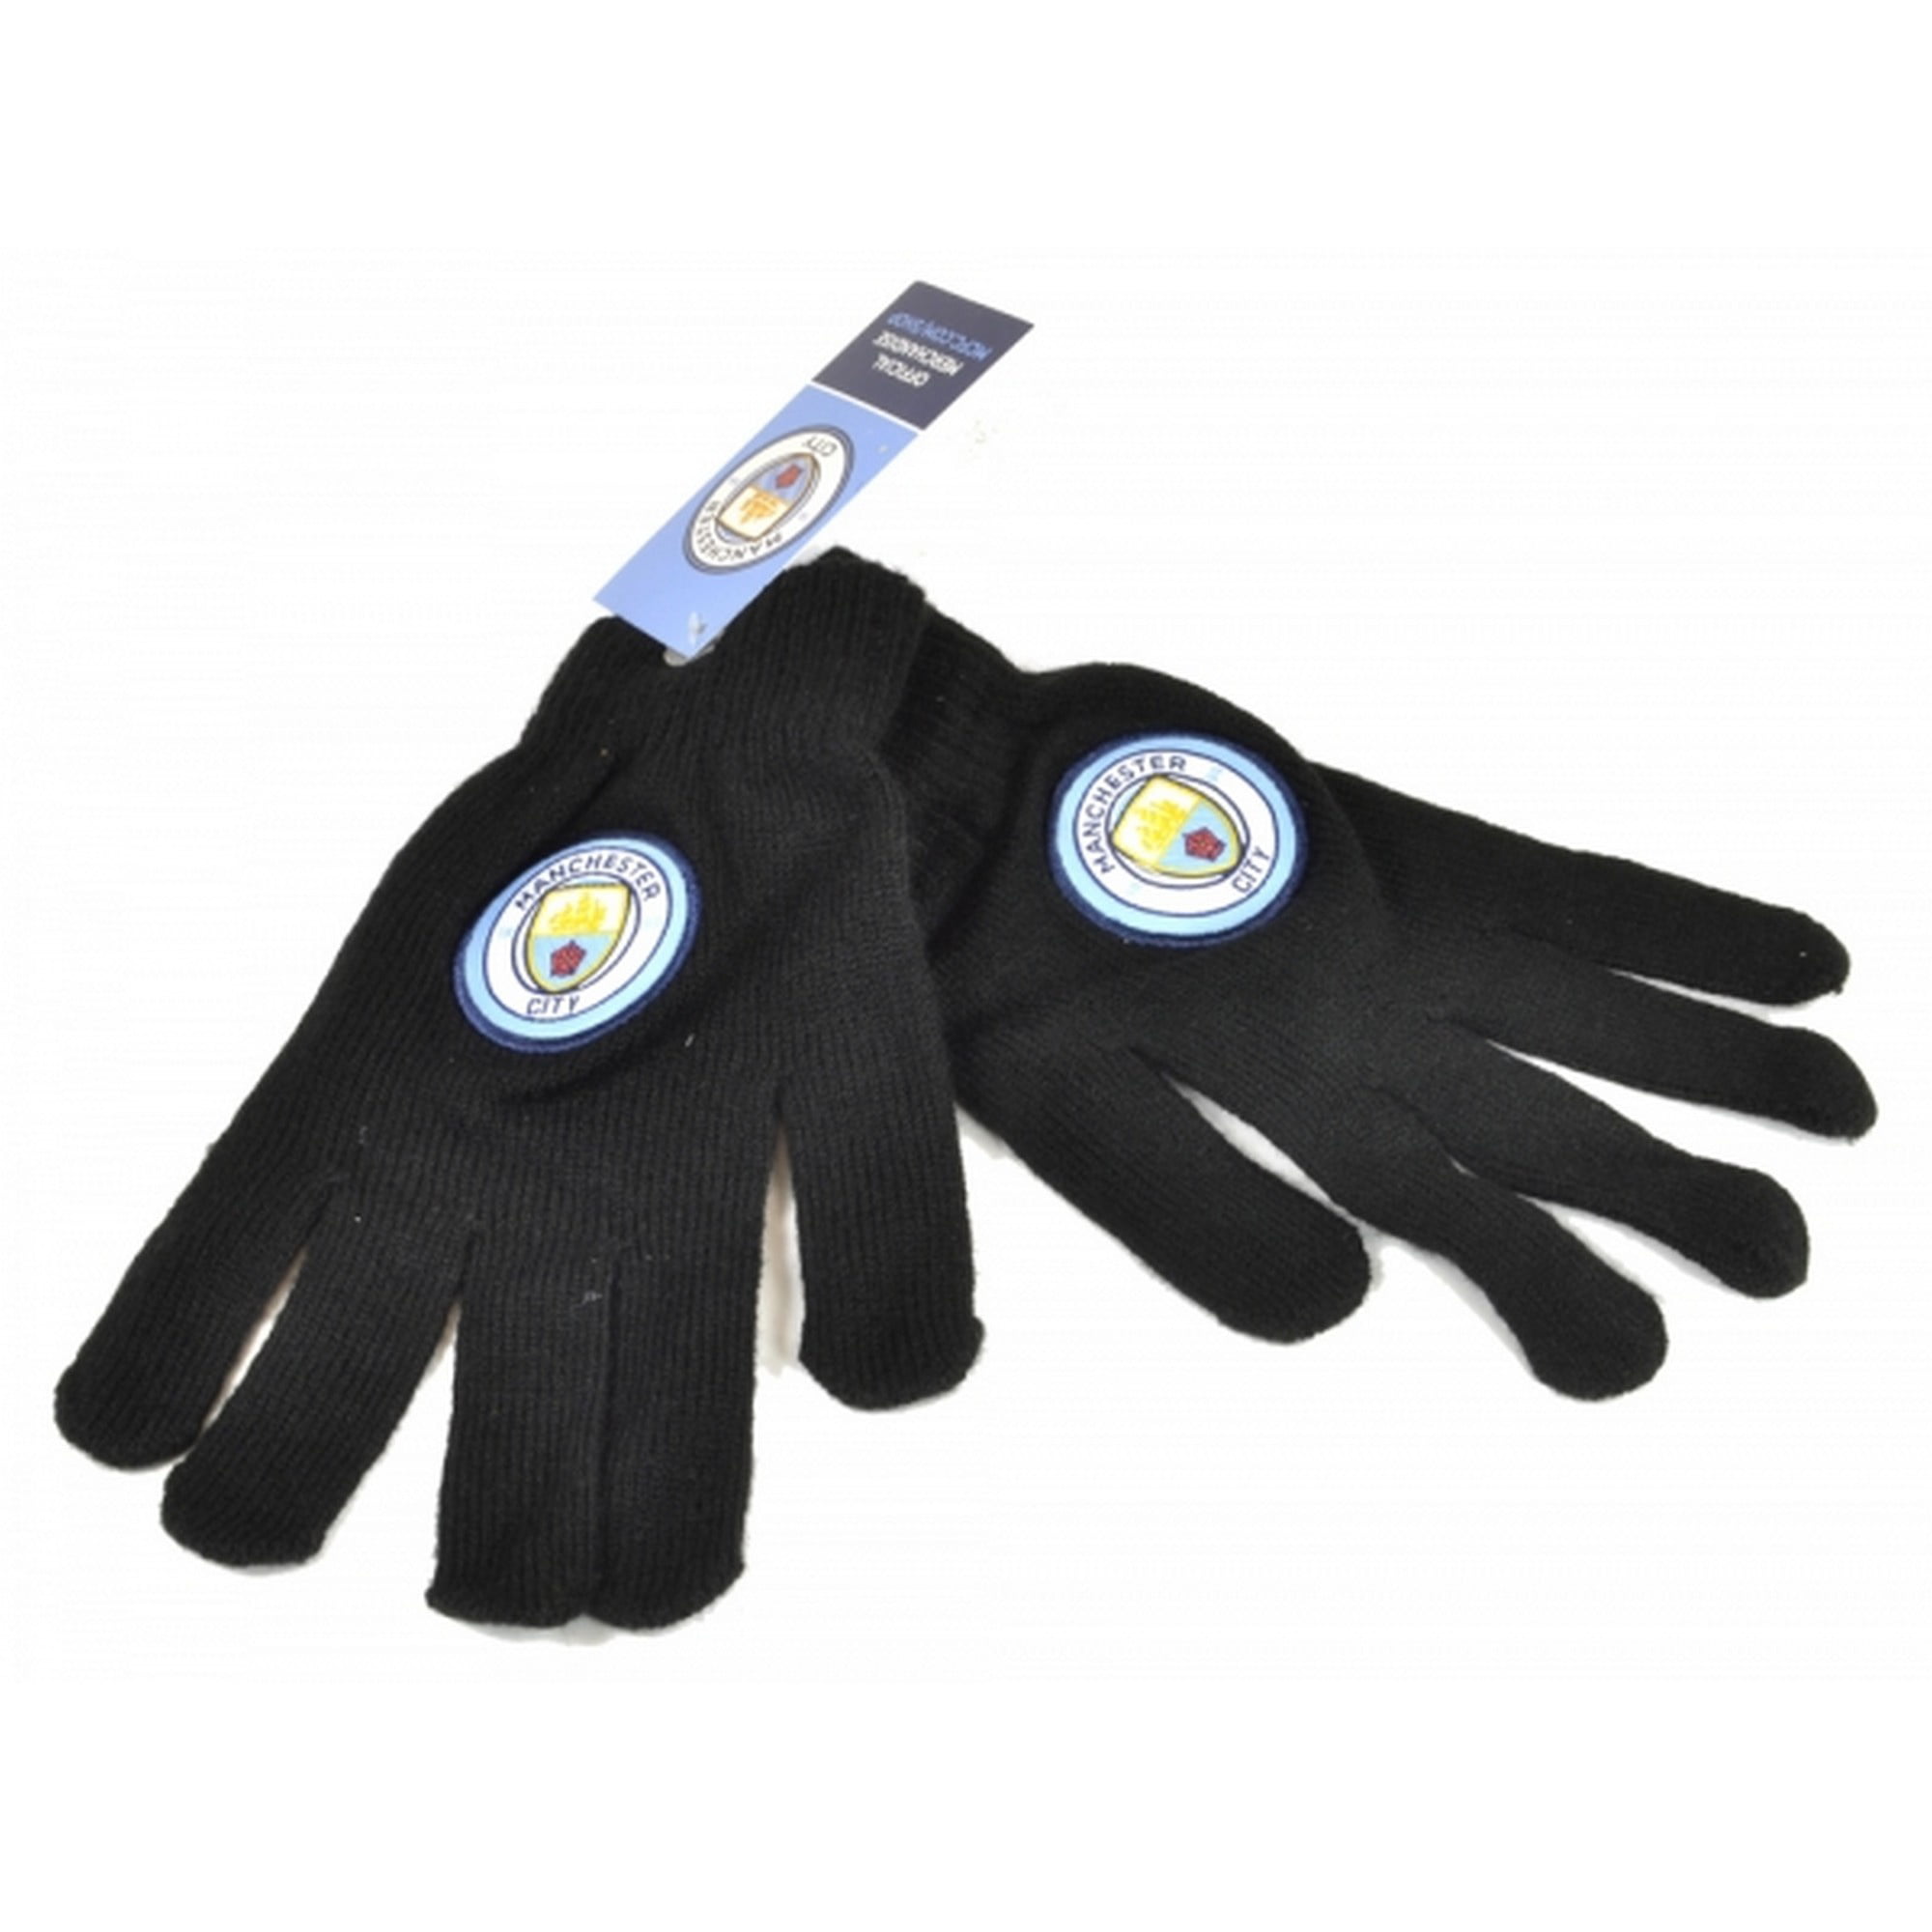 Manchester City Football Club Knitted Gloves Mens Fairisle Player Birthday GIFT 